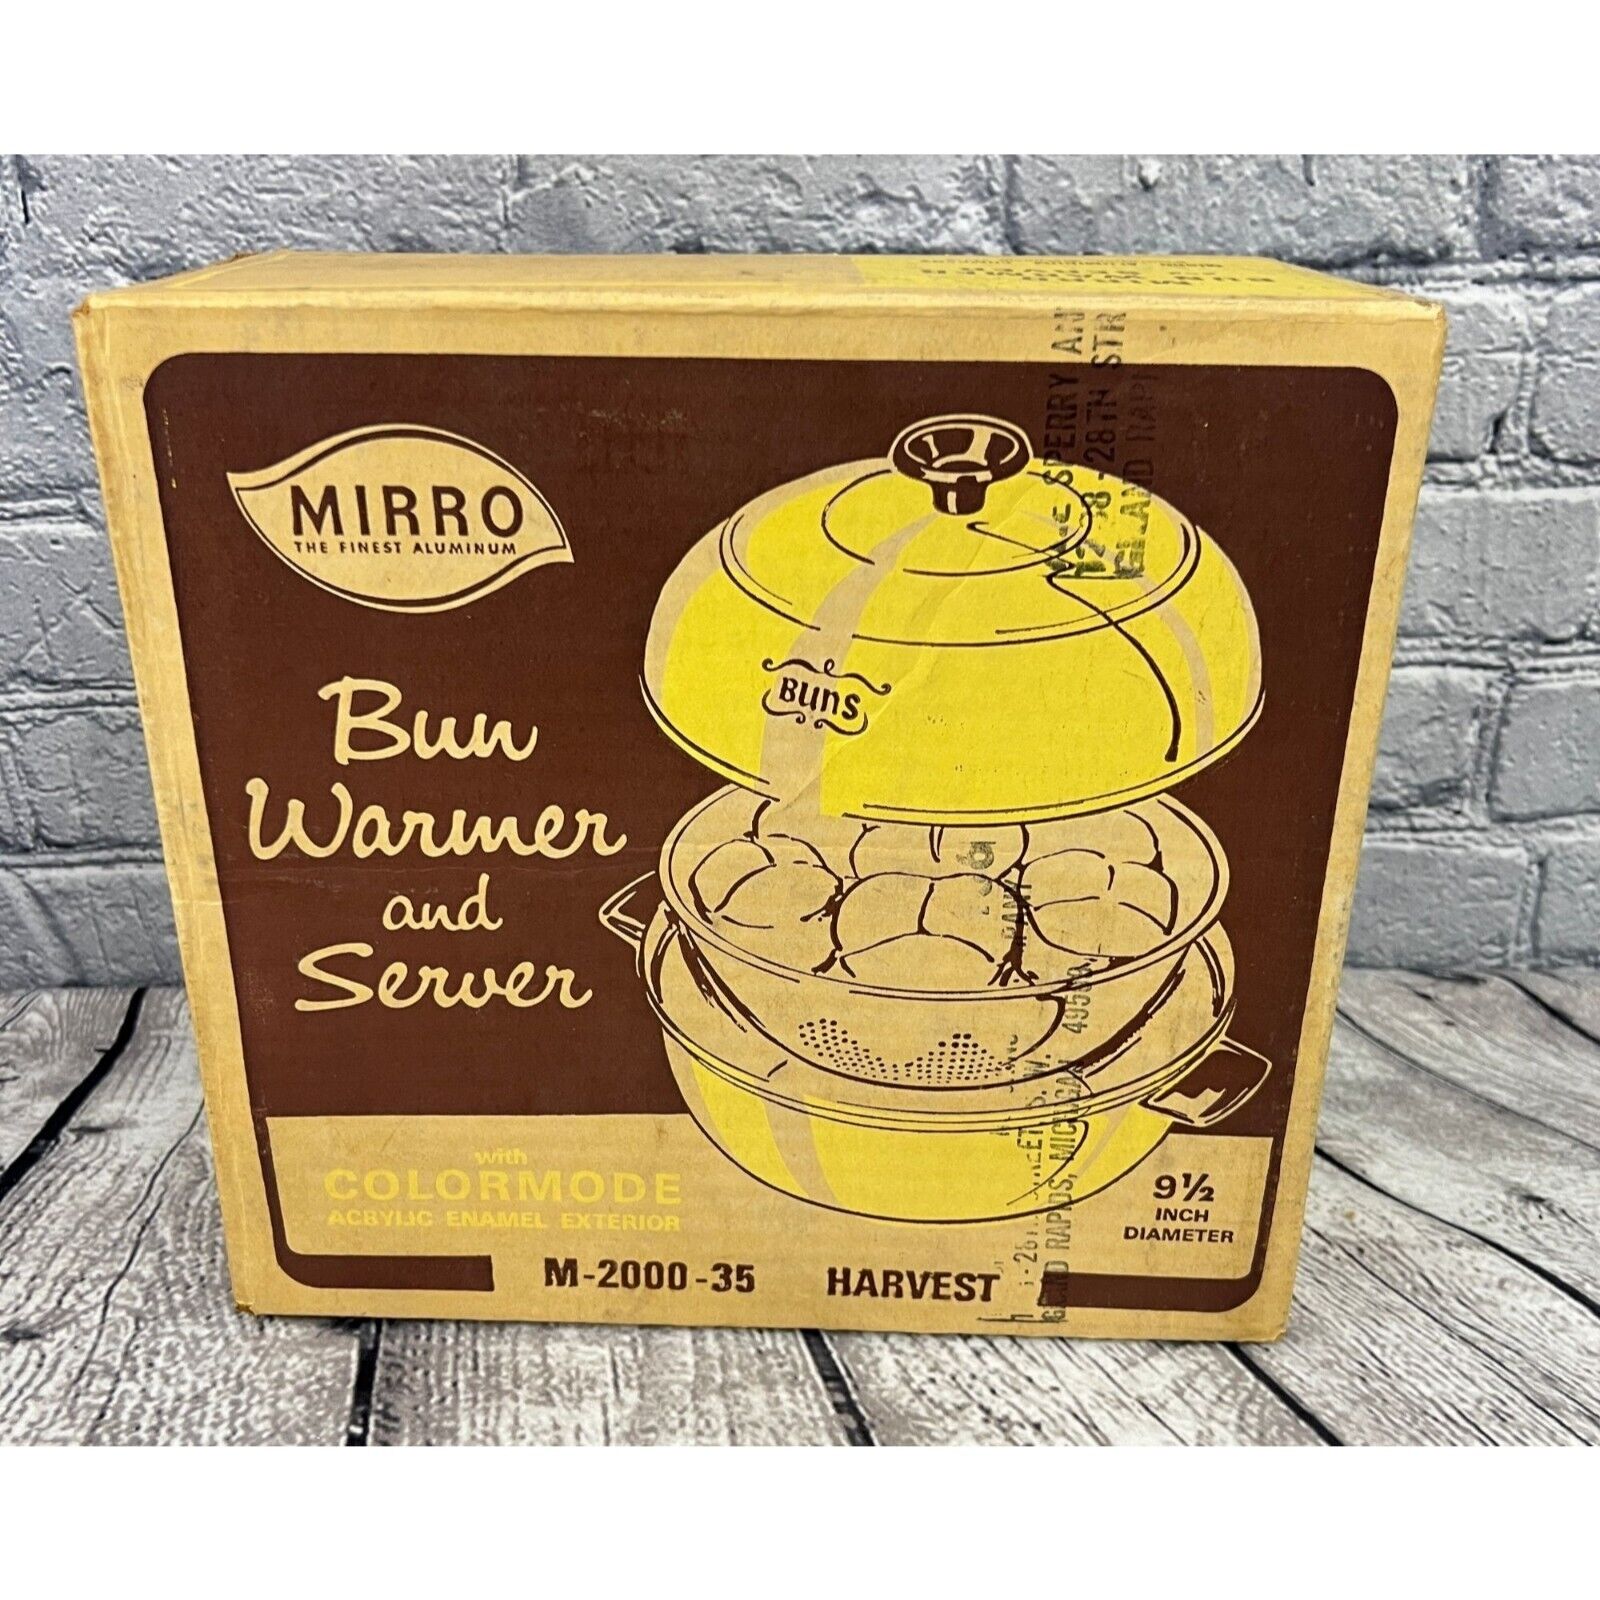 NEW Vintage Mirro Bun Warmer and Server 3 piece Aluminum Harvest Gold 9 1/2